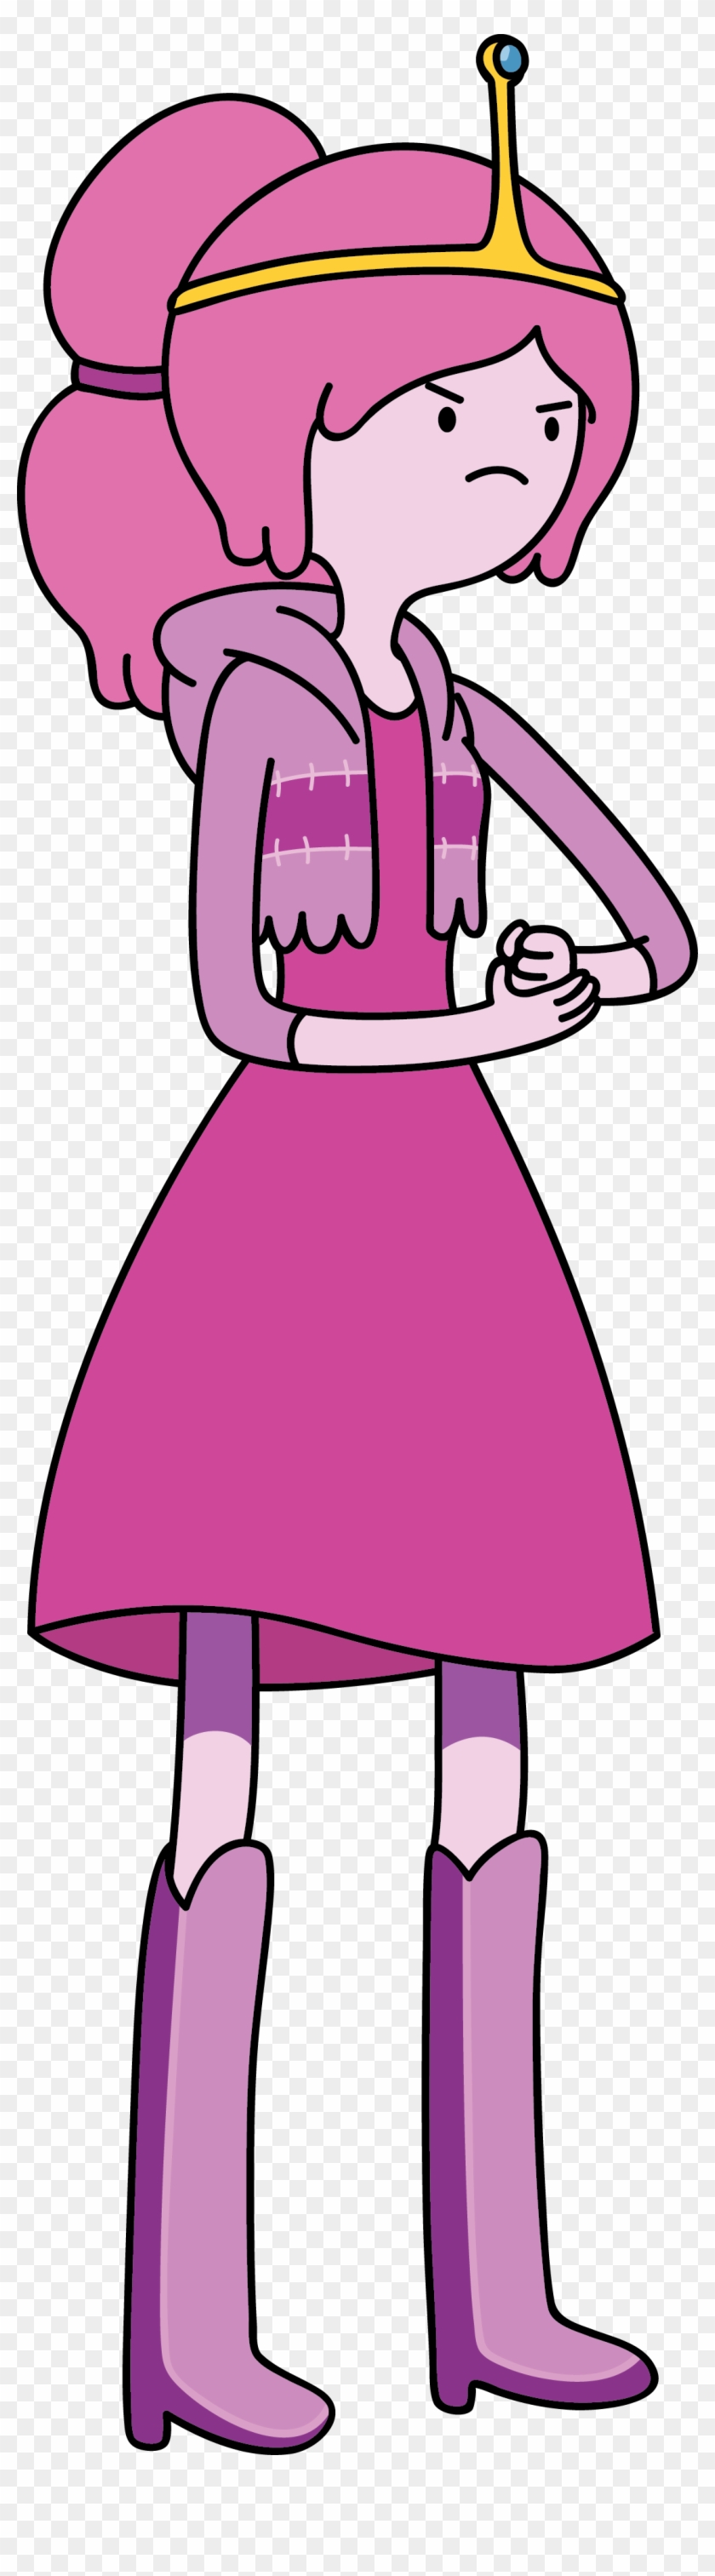 Princess Bubblegum - Google Search - Princess Bubblegum #703686